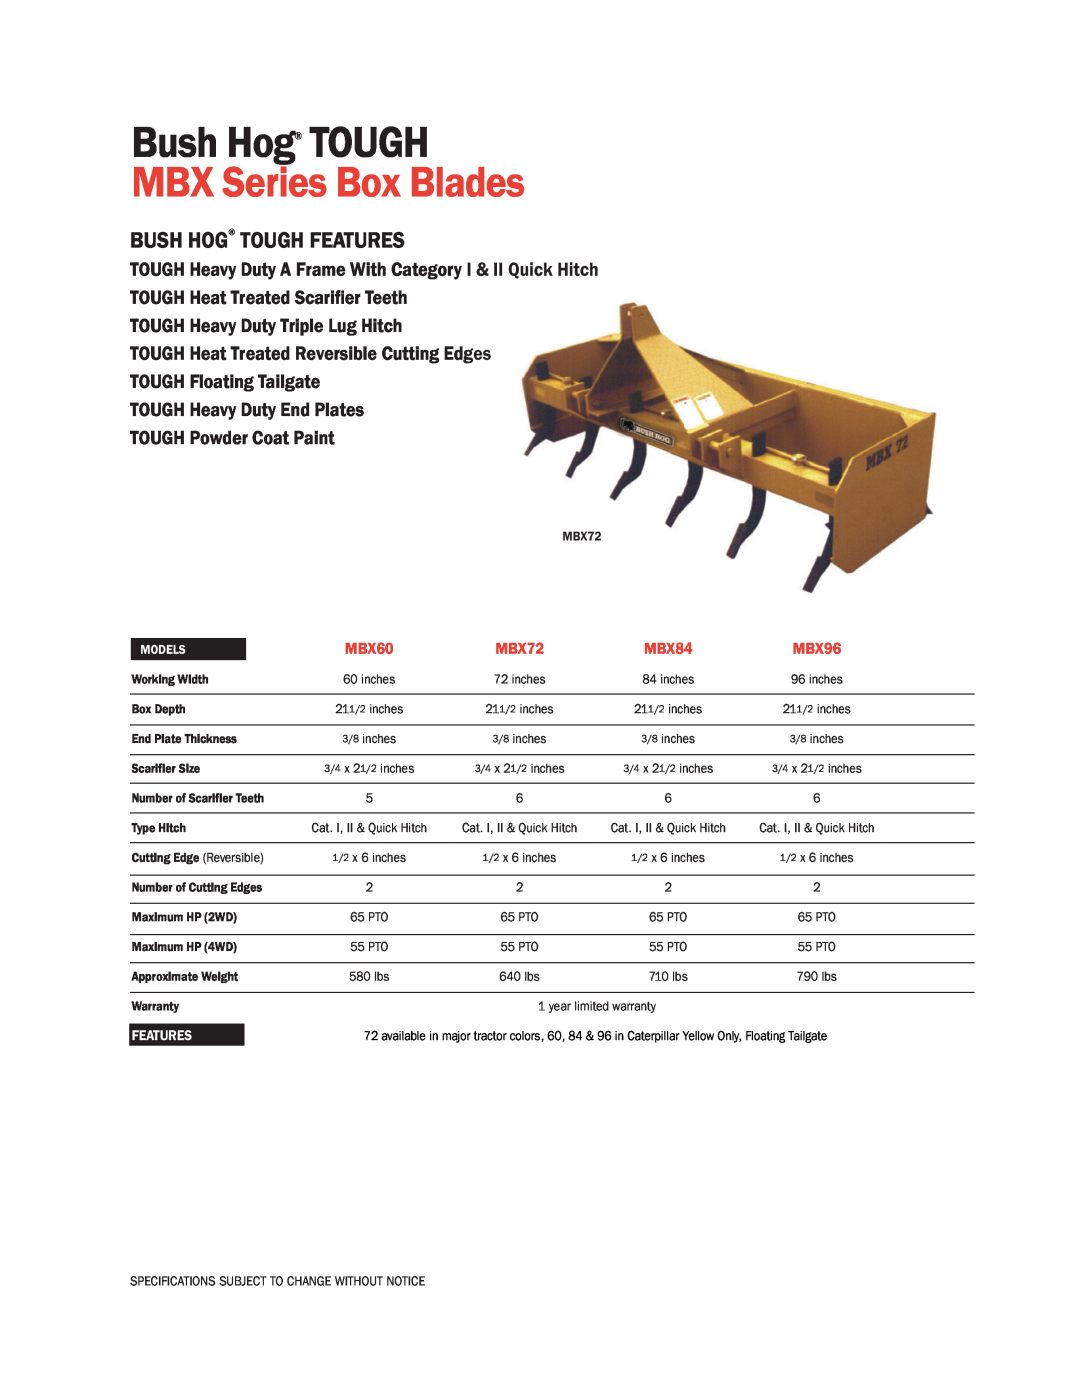 Bush Hog specifications MBX Series Box Blades, Bush Hog TOUGH Features, TOUGH Heat Treated Scarifier Teeth, MBX60 